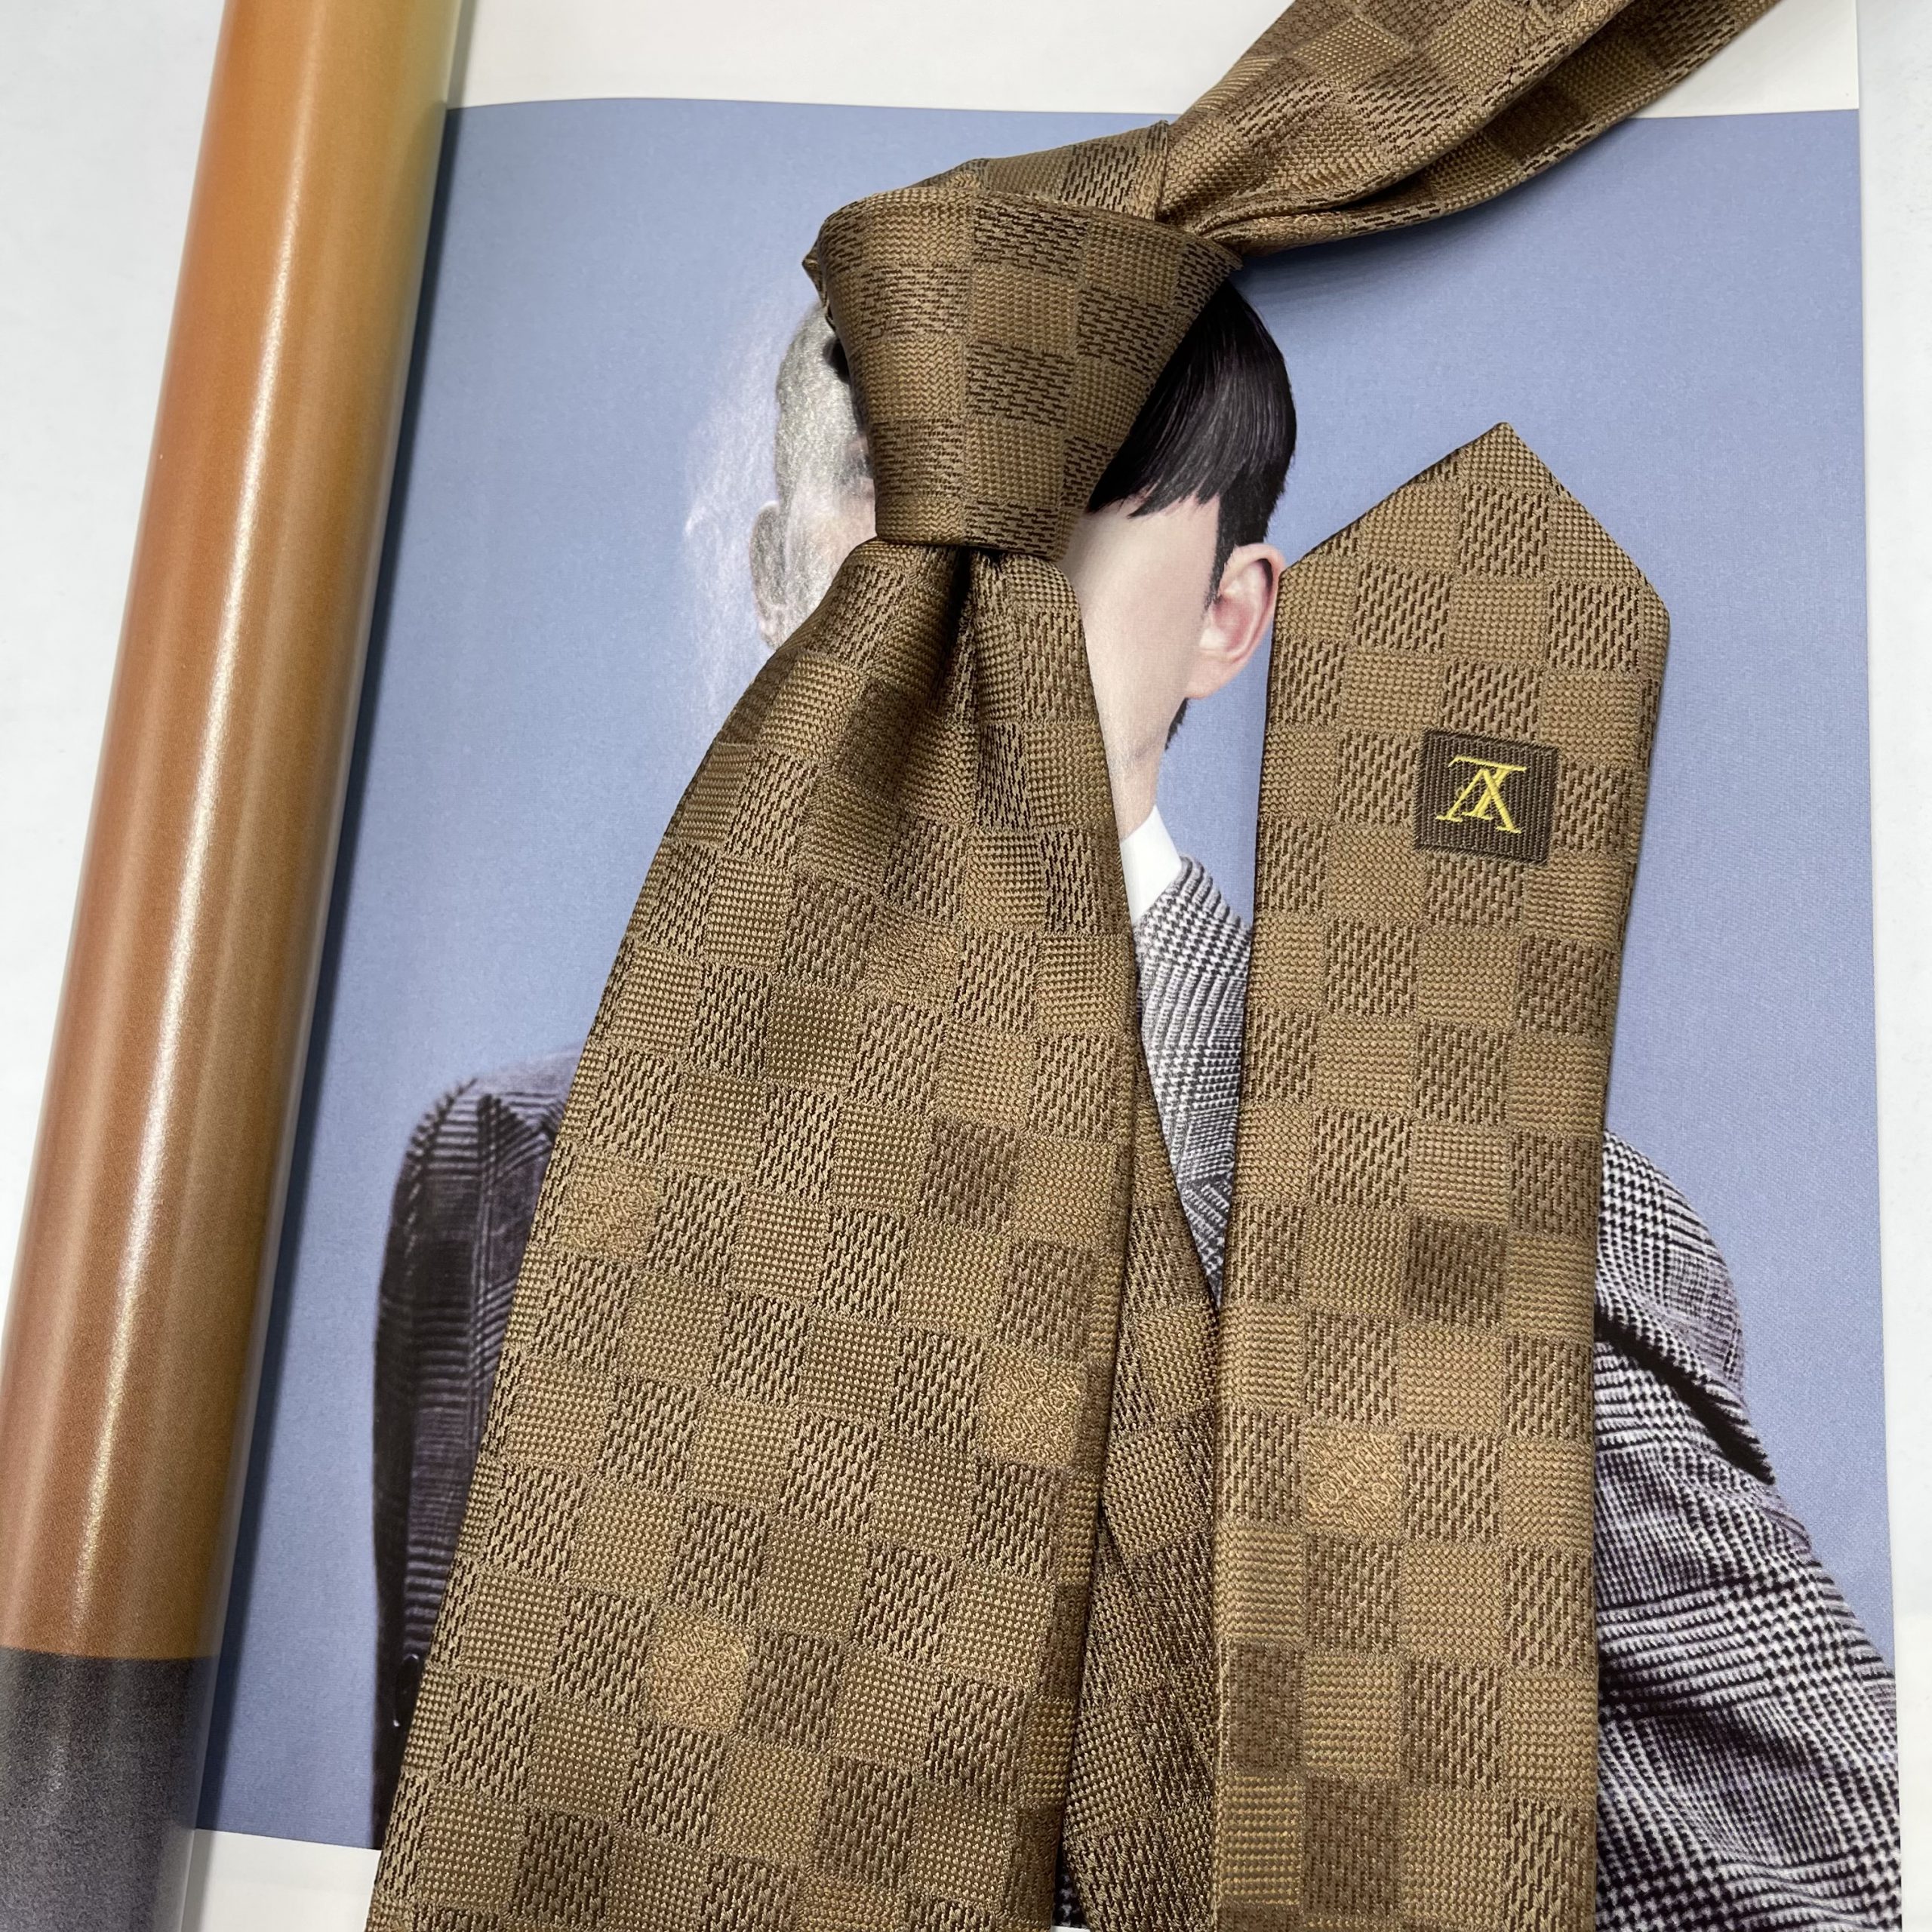 Louis Vuitton Men's Neck Tie Silver Brown Pattern Silk France